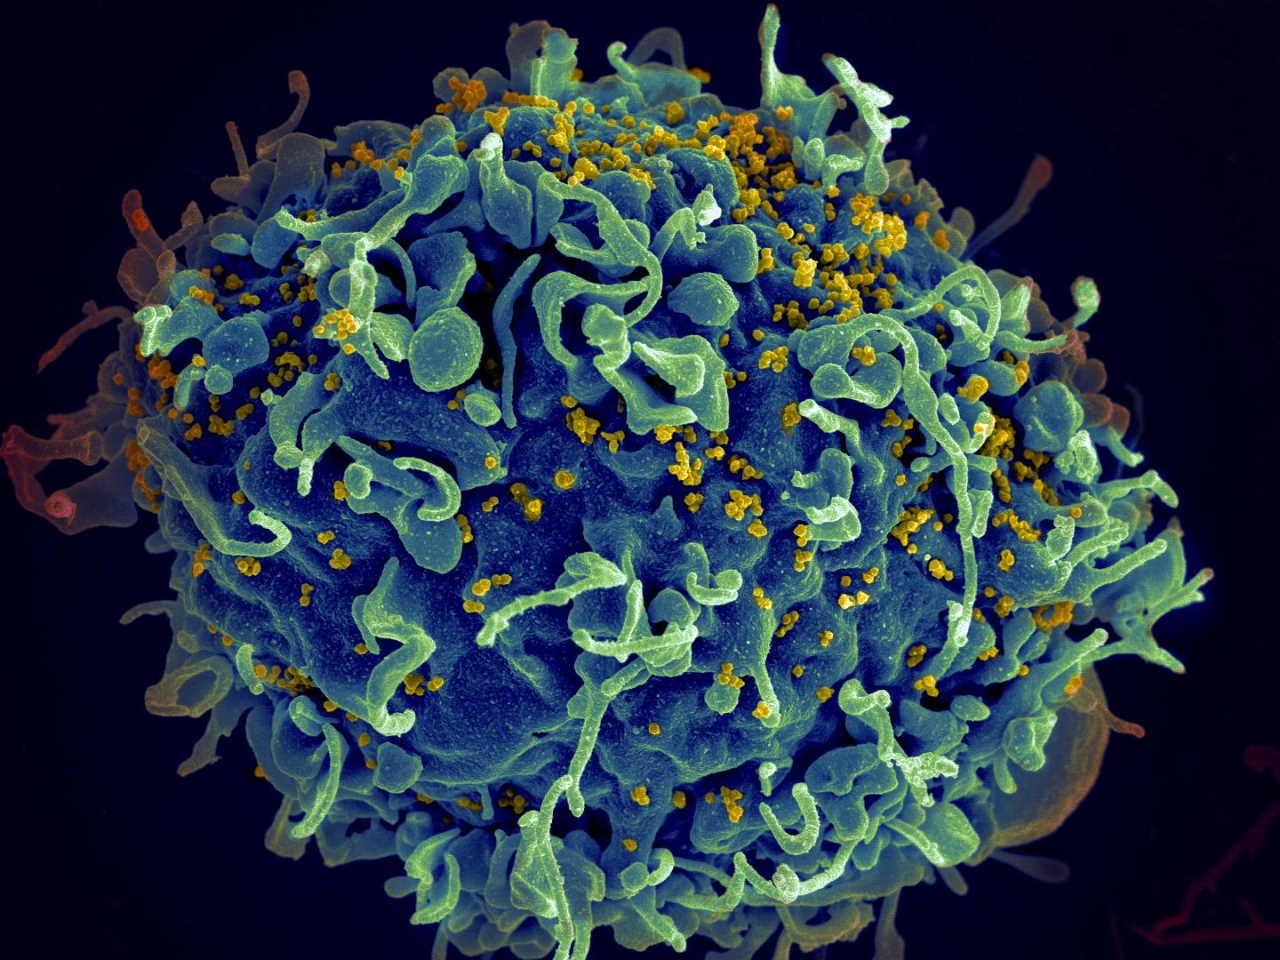 Імунна Т-клітина людини (синя) атакується вірусами імунодефіциту людини (жовті). Seth Pincus, Elizabeth Fischer and Austin Athman / National Institute of Allergy and Infectious Diseases